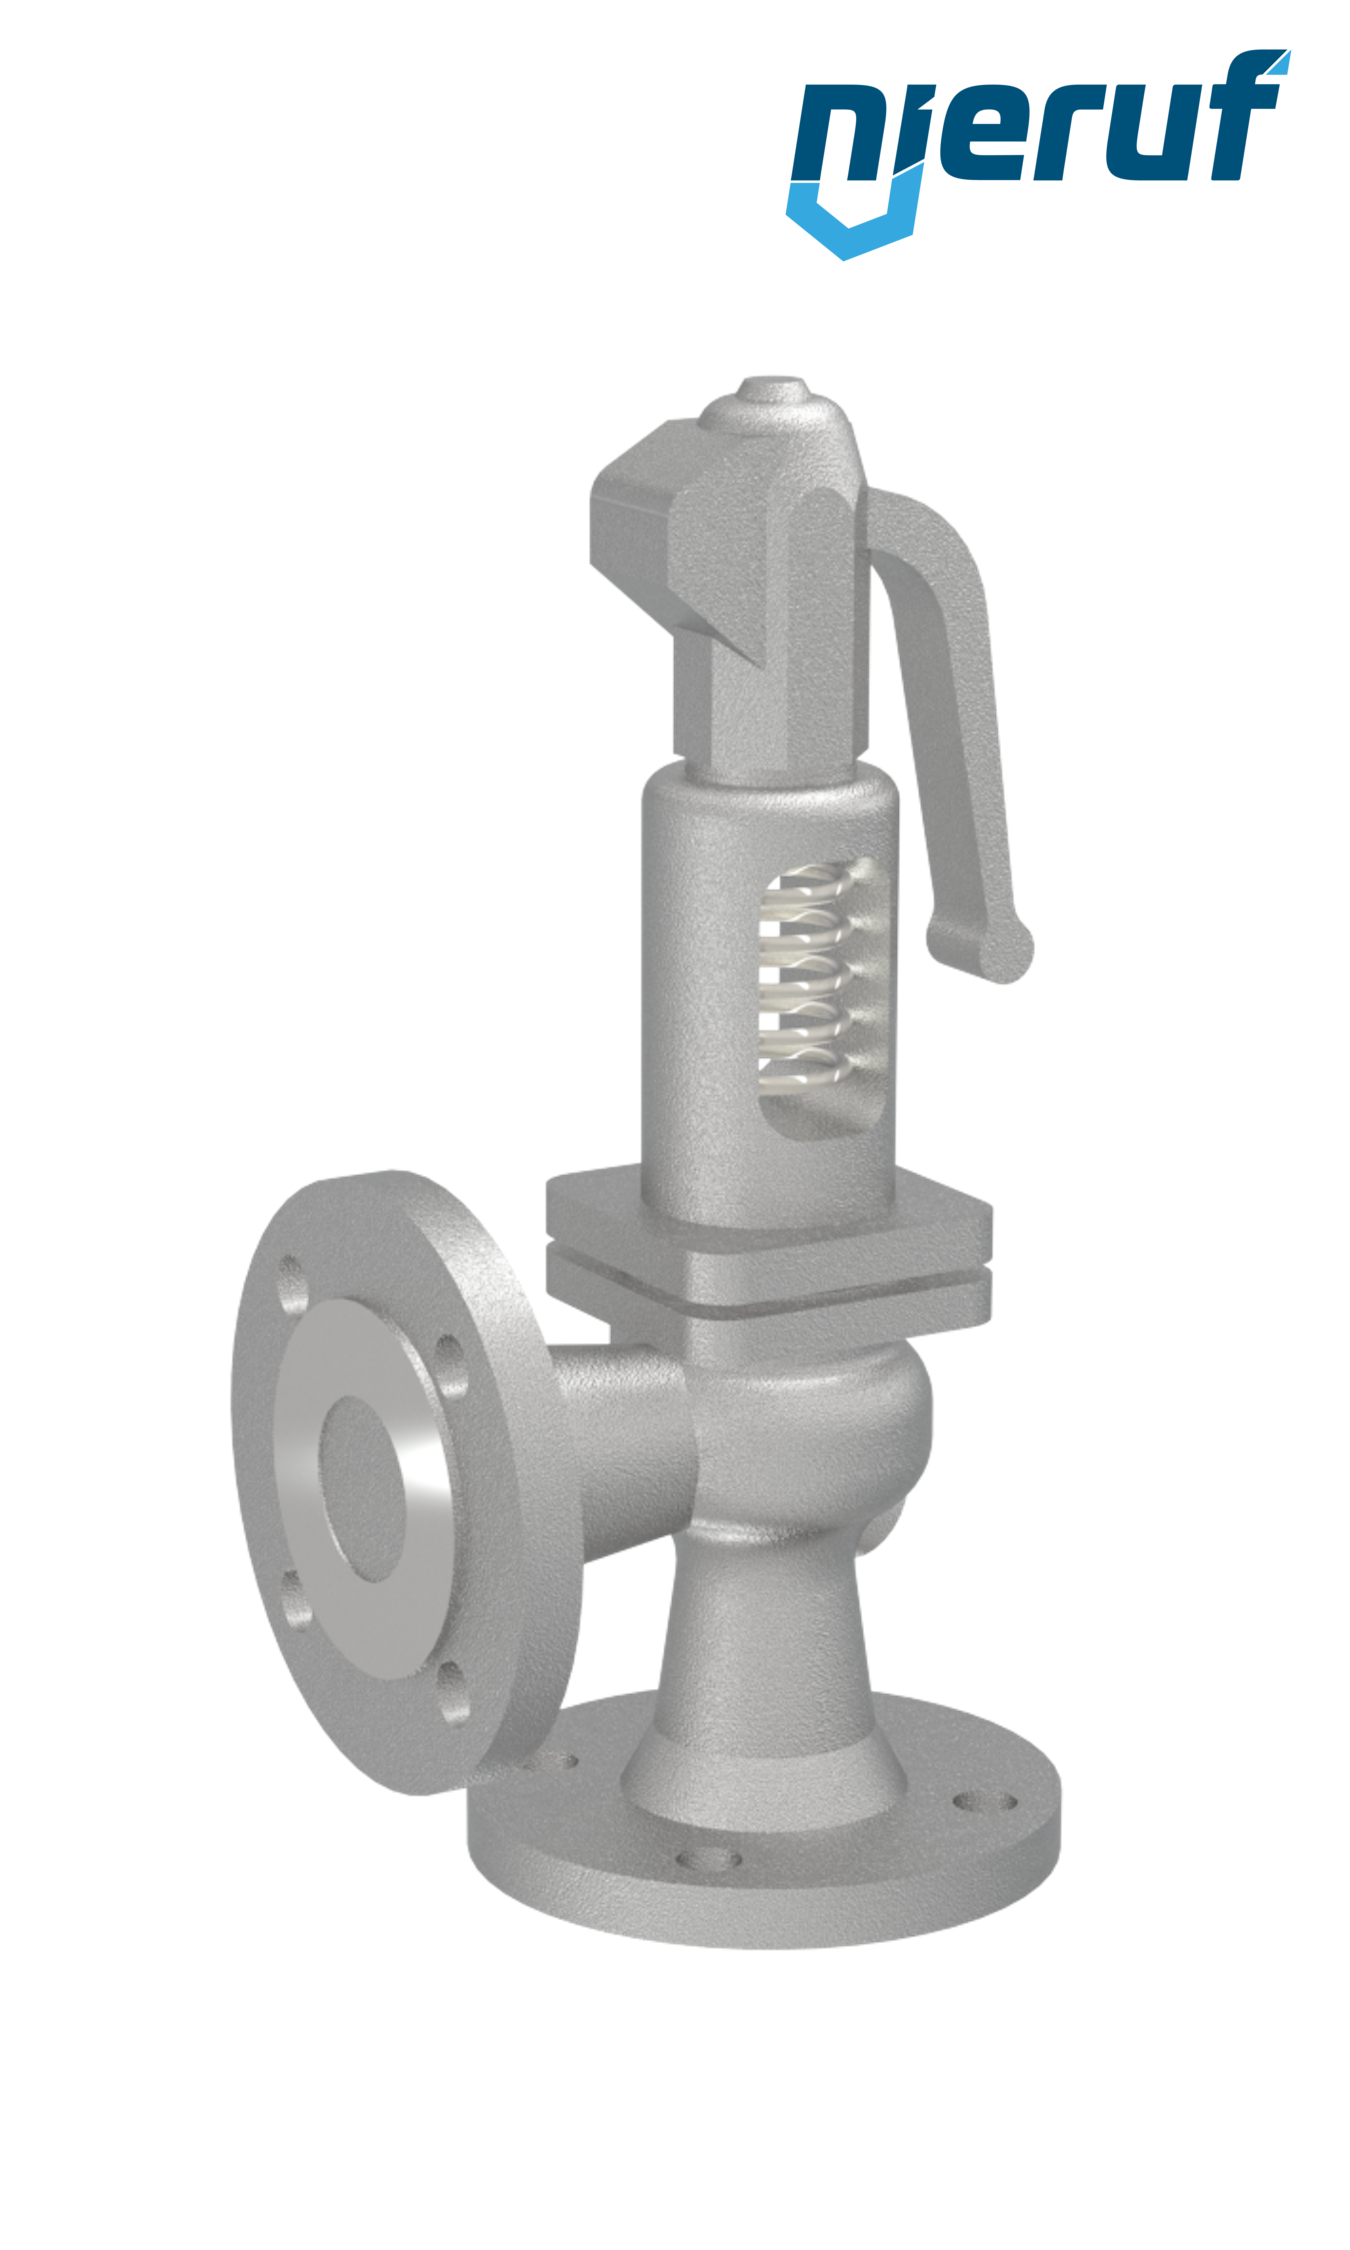 flange-safety valve DN25/DN25 SF0102, cast iron EN-JL1040 FPM, with lever